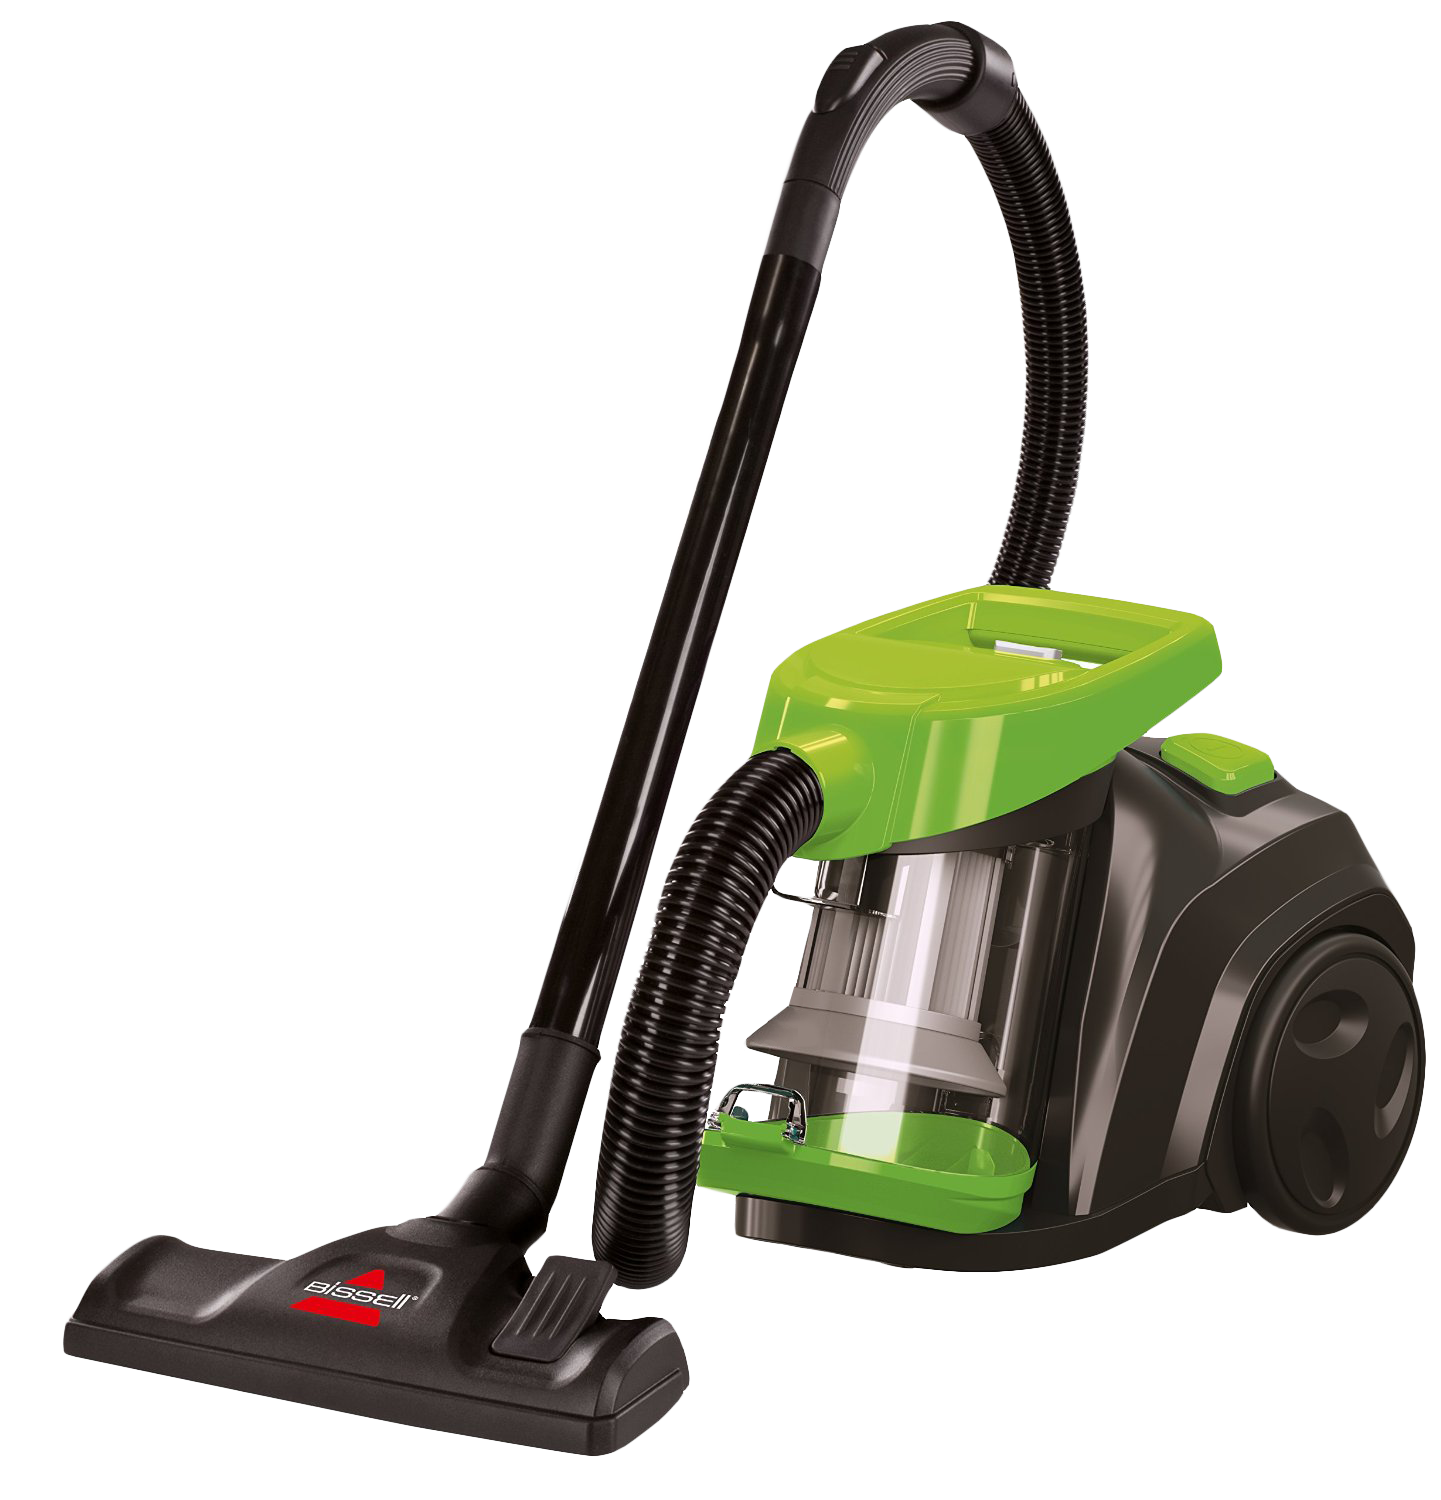 House Vacuum Cleaner